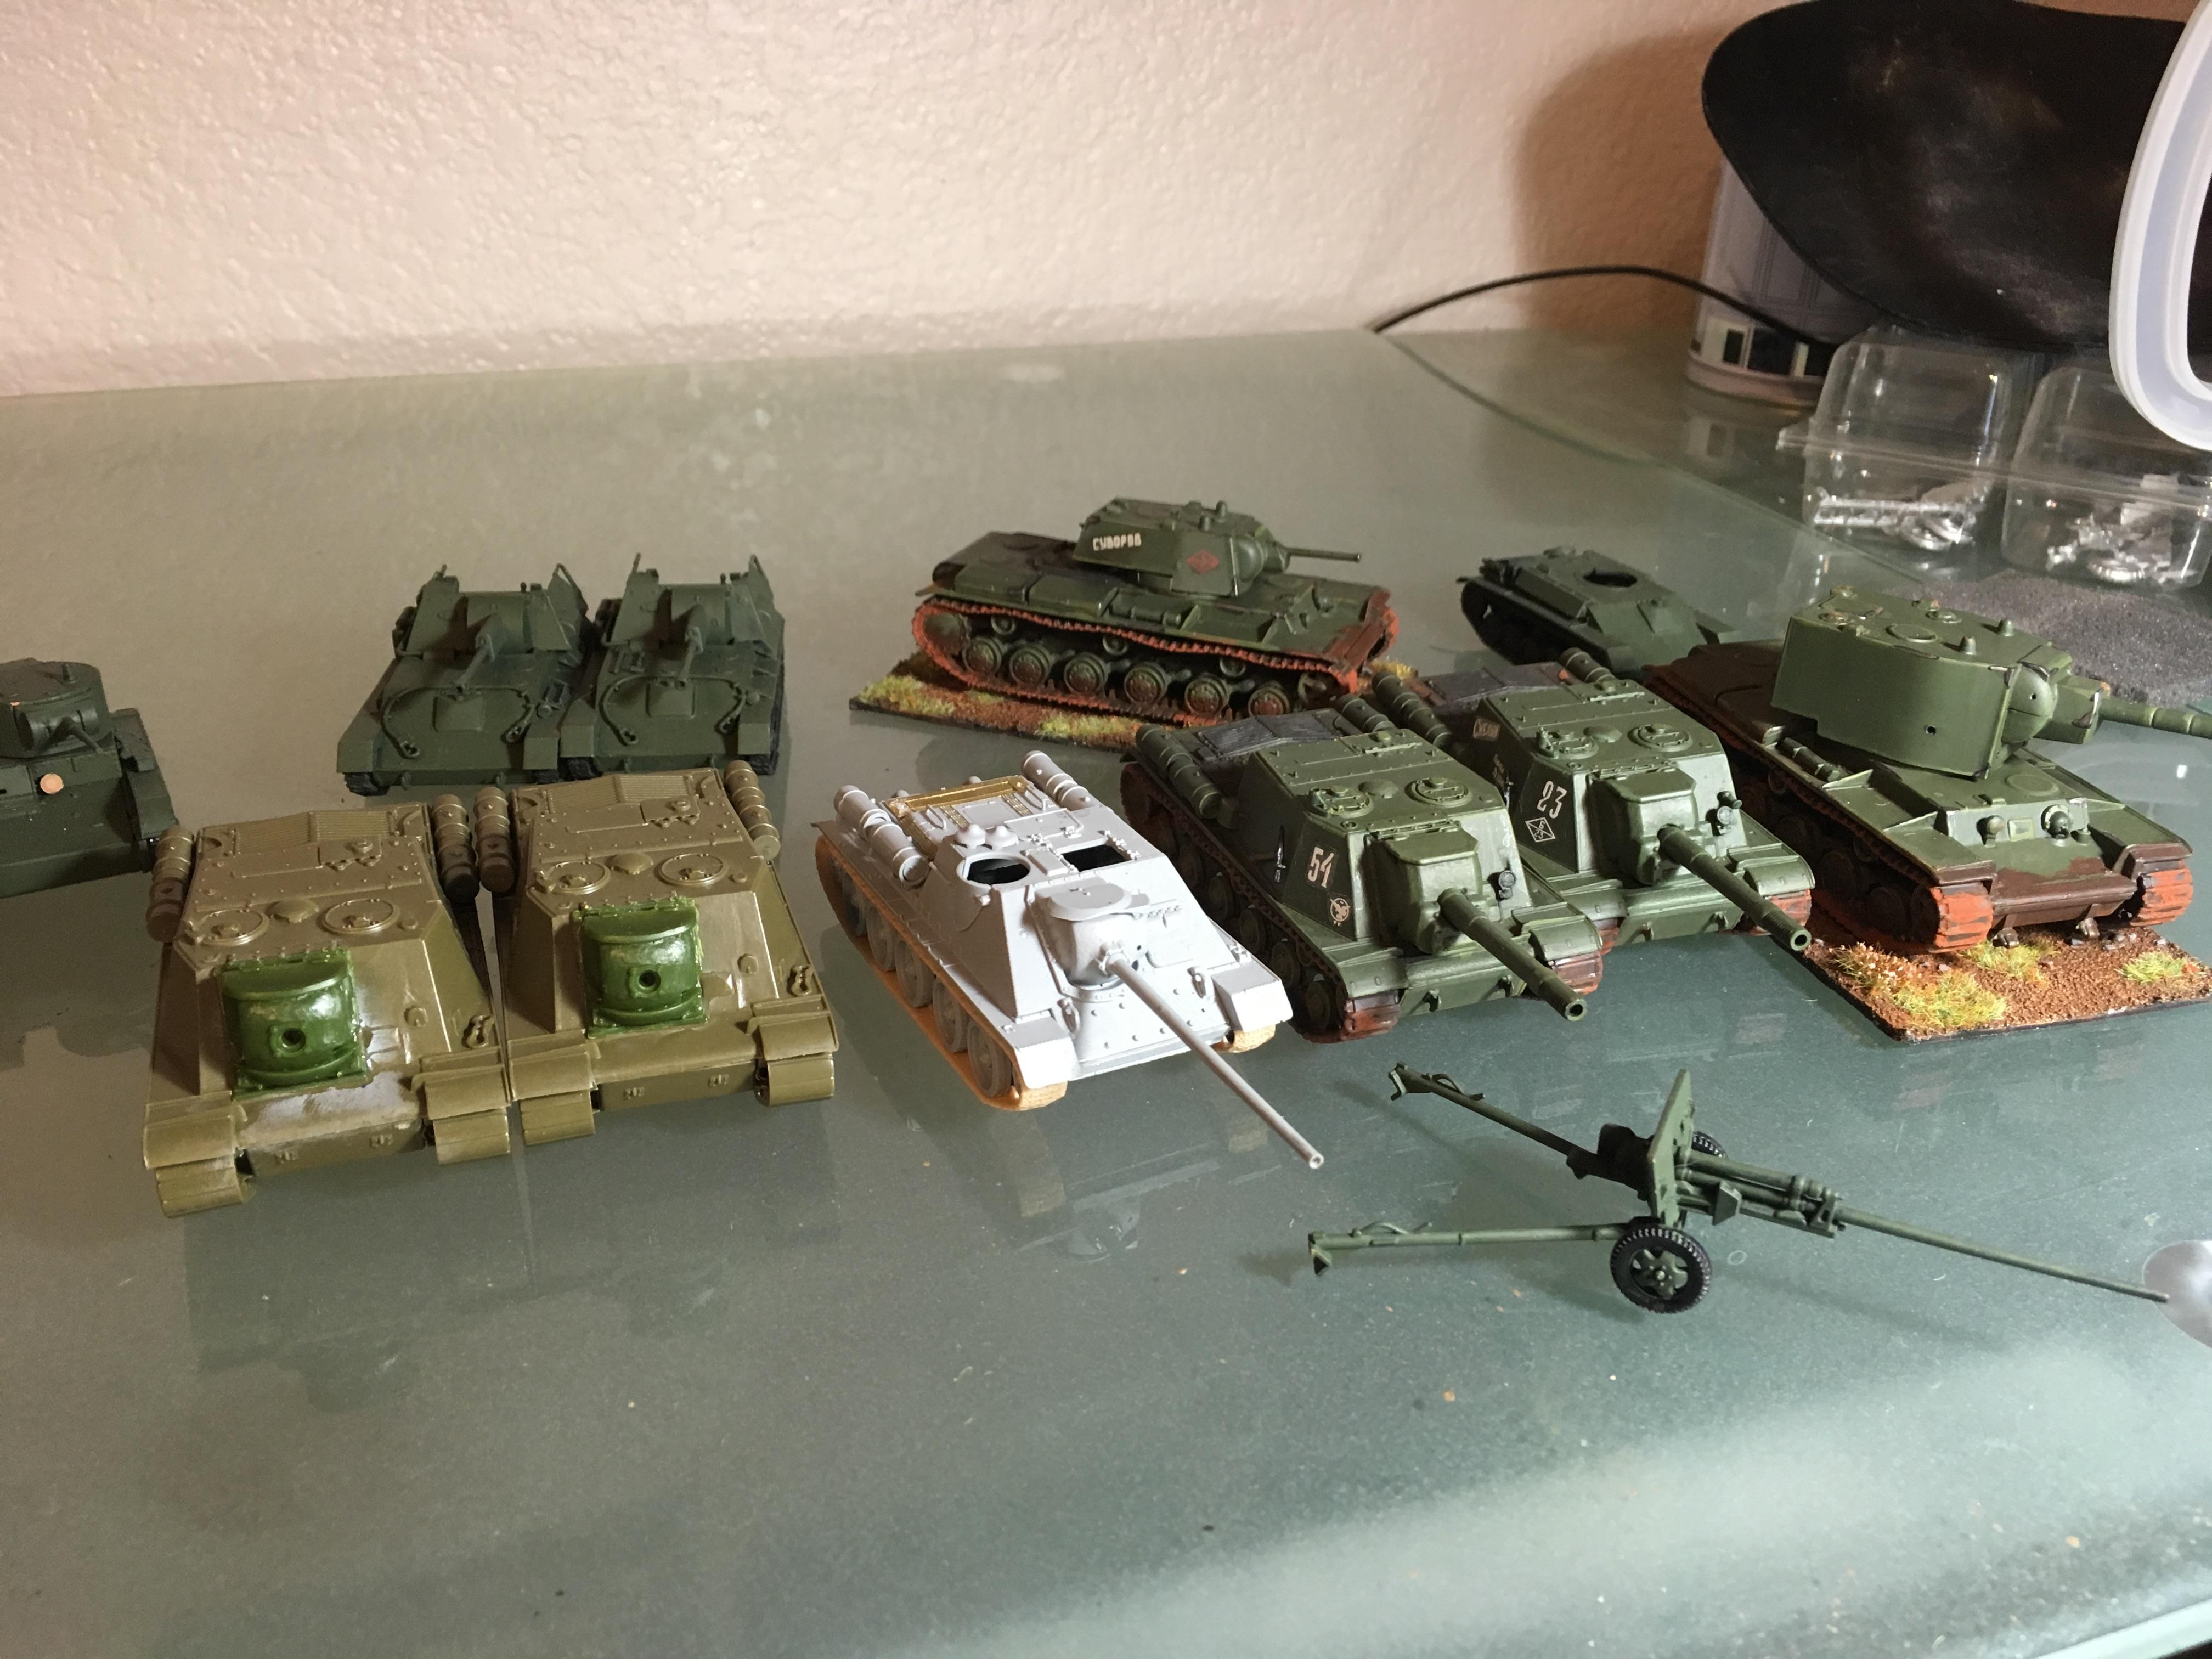 More tanks